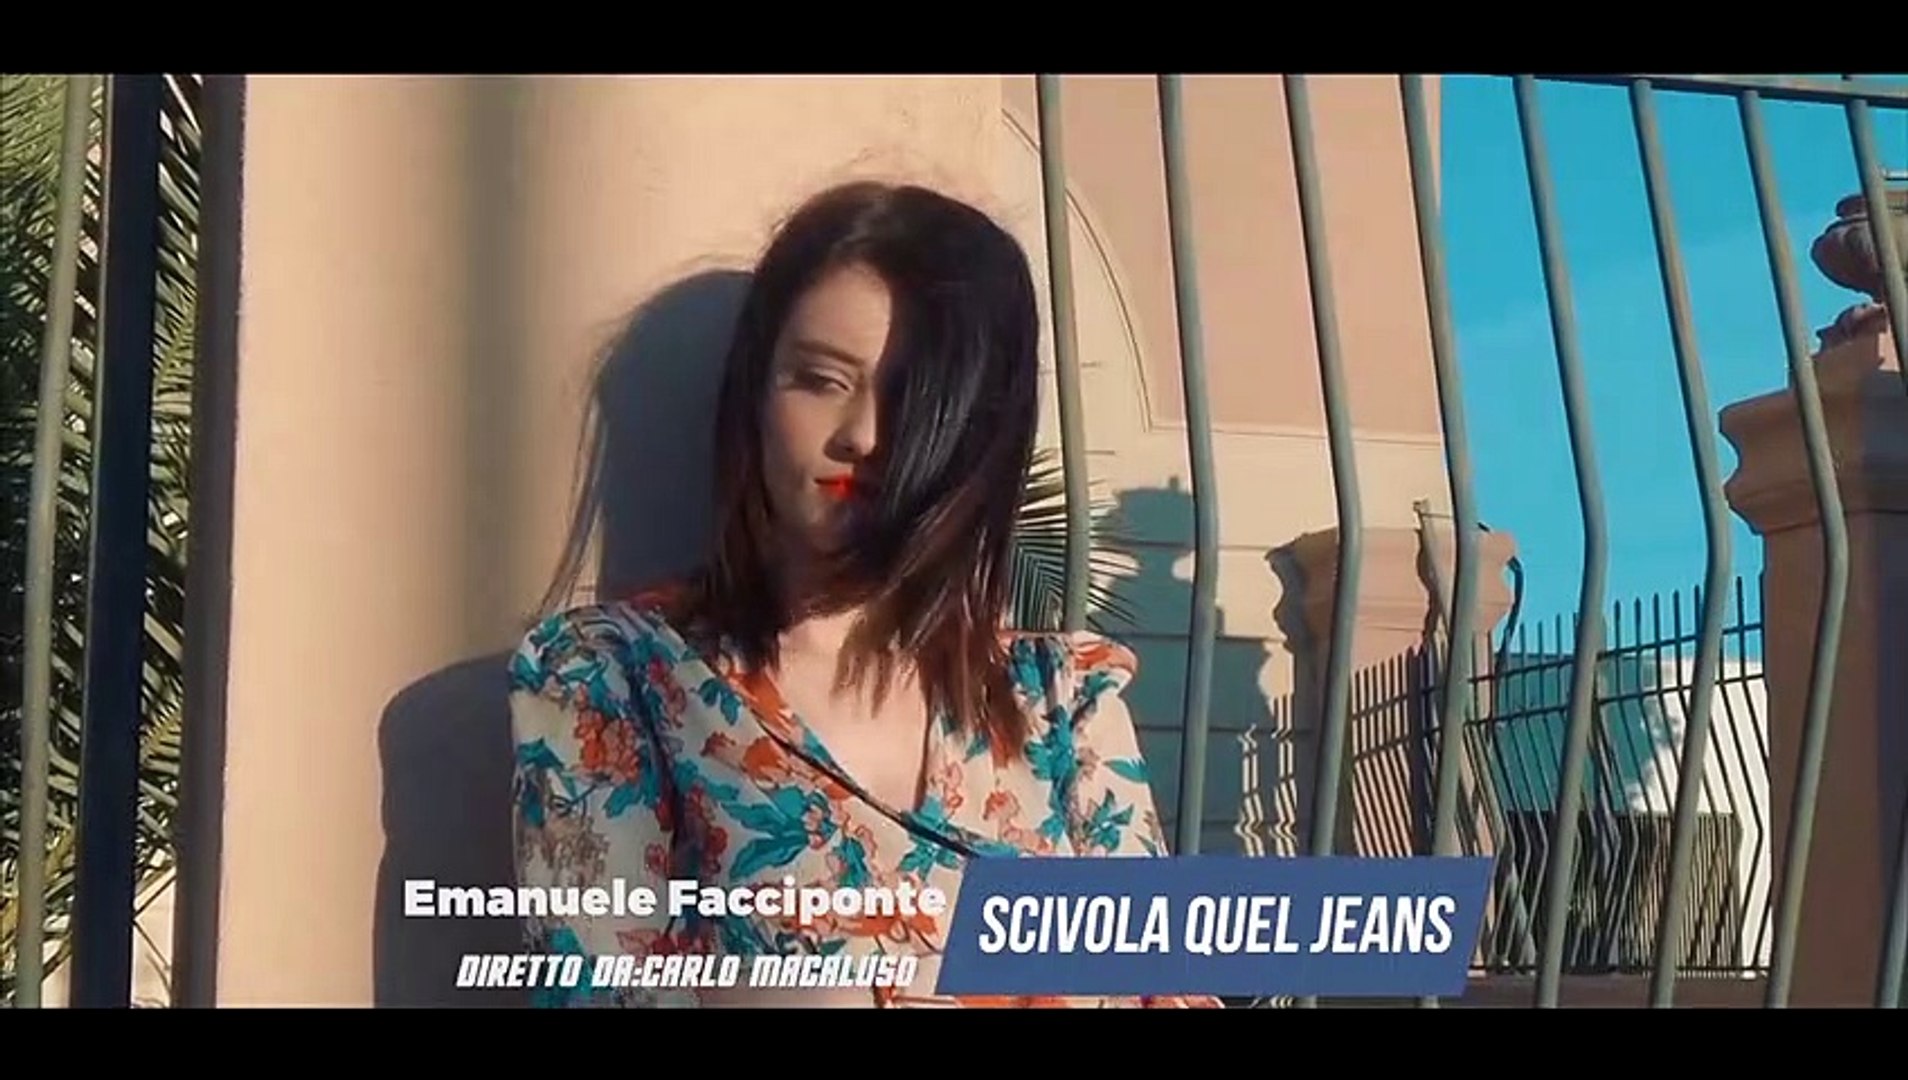 Emanuele Facciponte - Scivola quel jeans ( Cover ) - Video Dailymotion